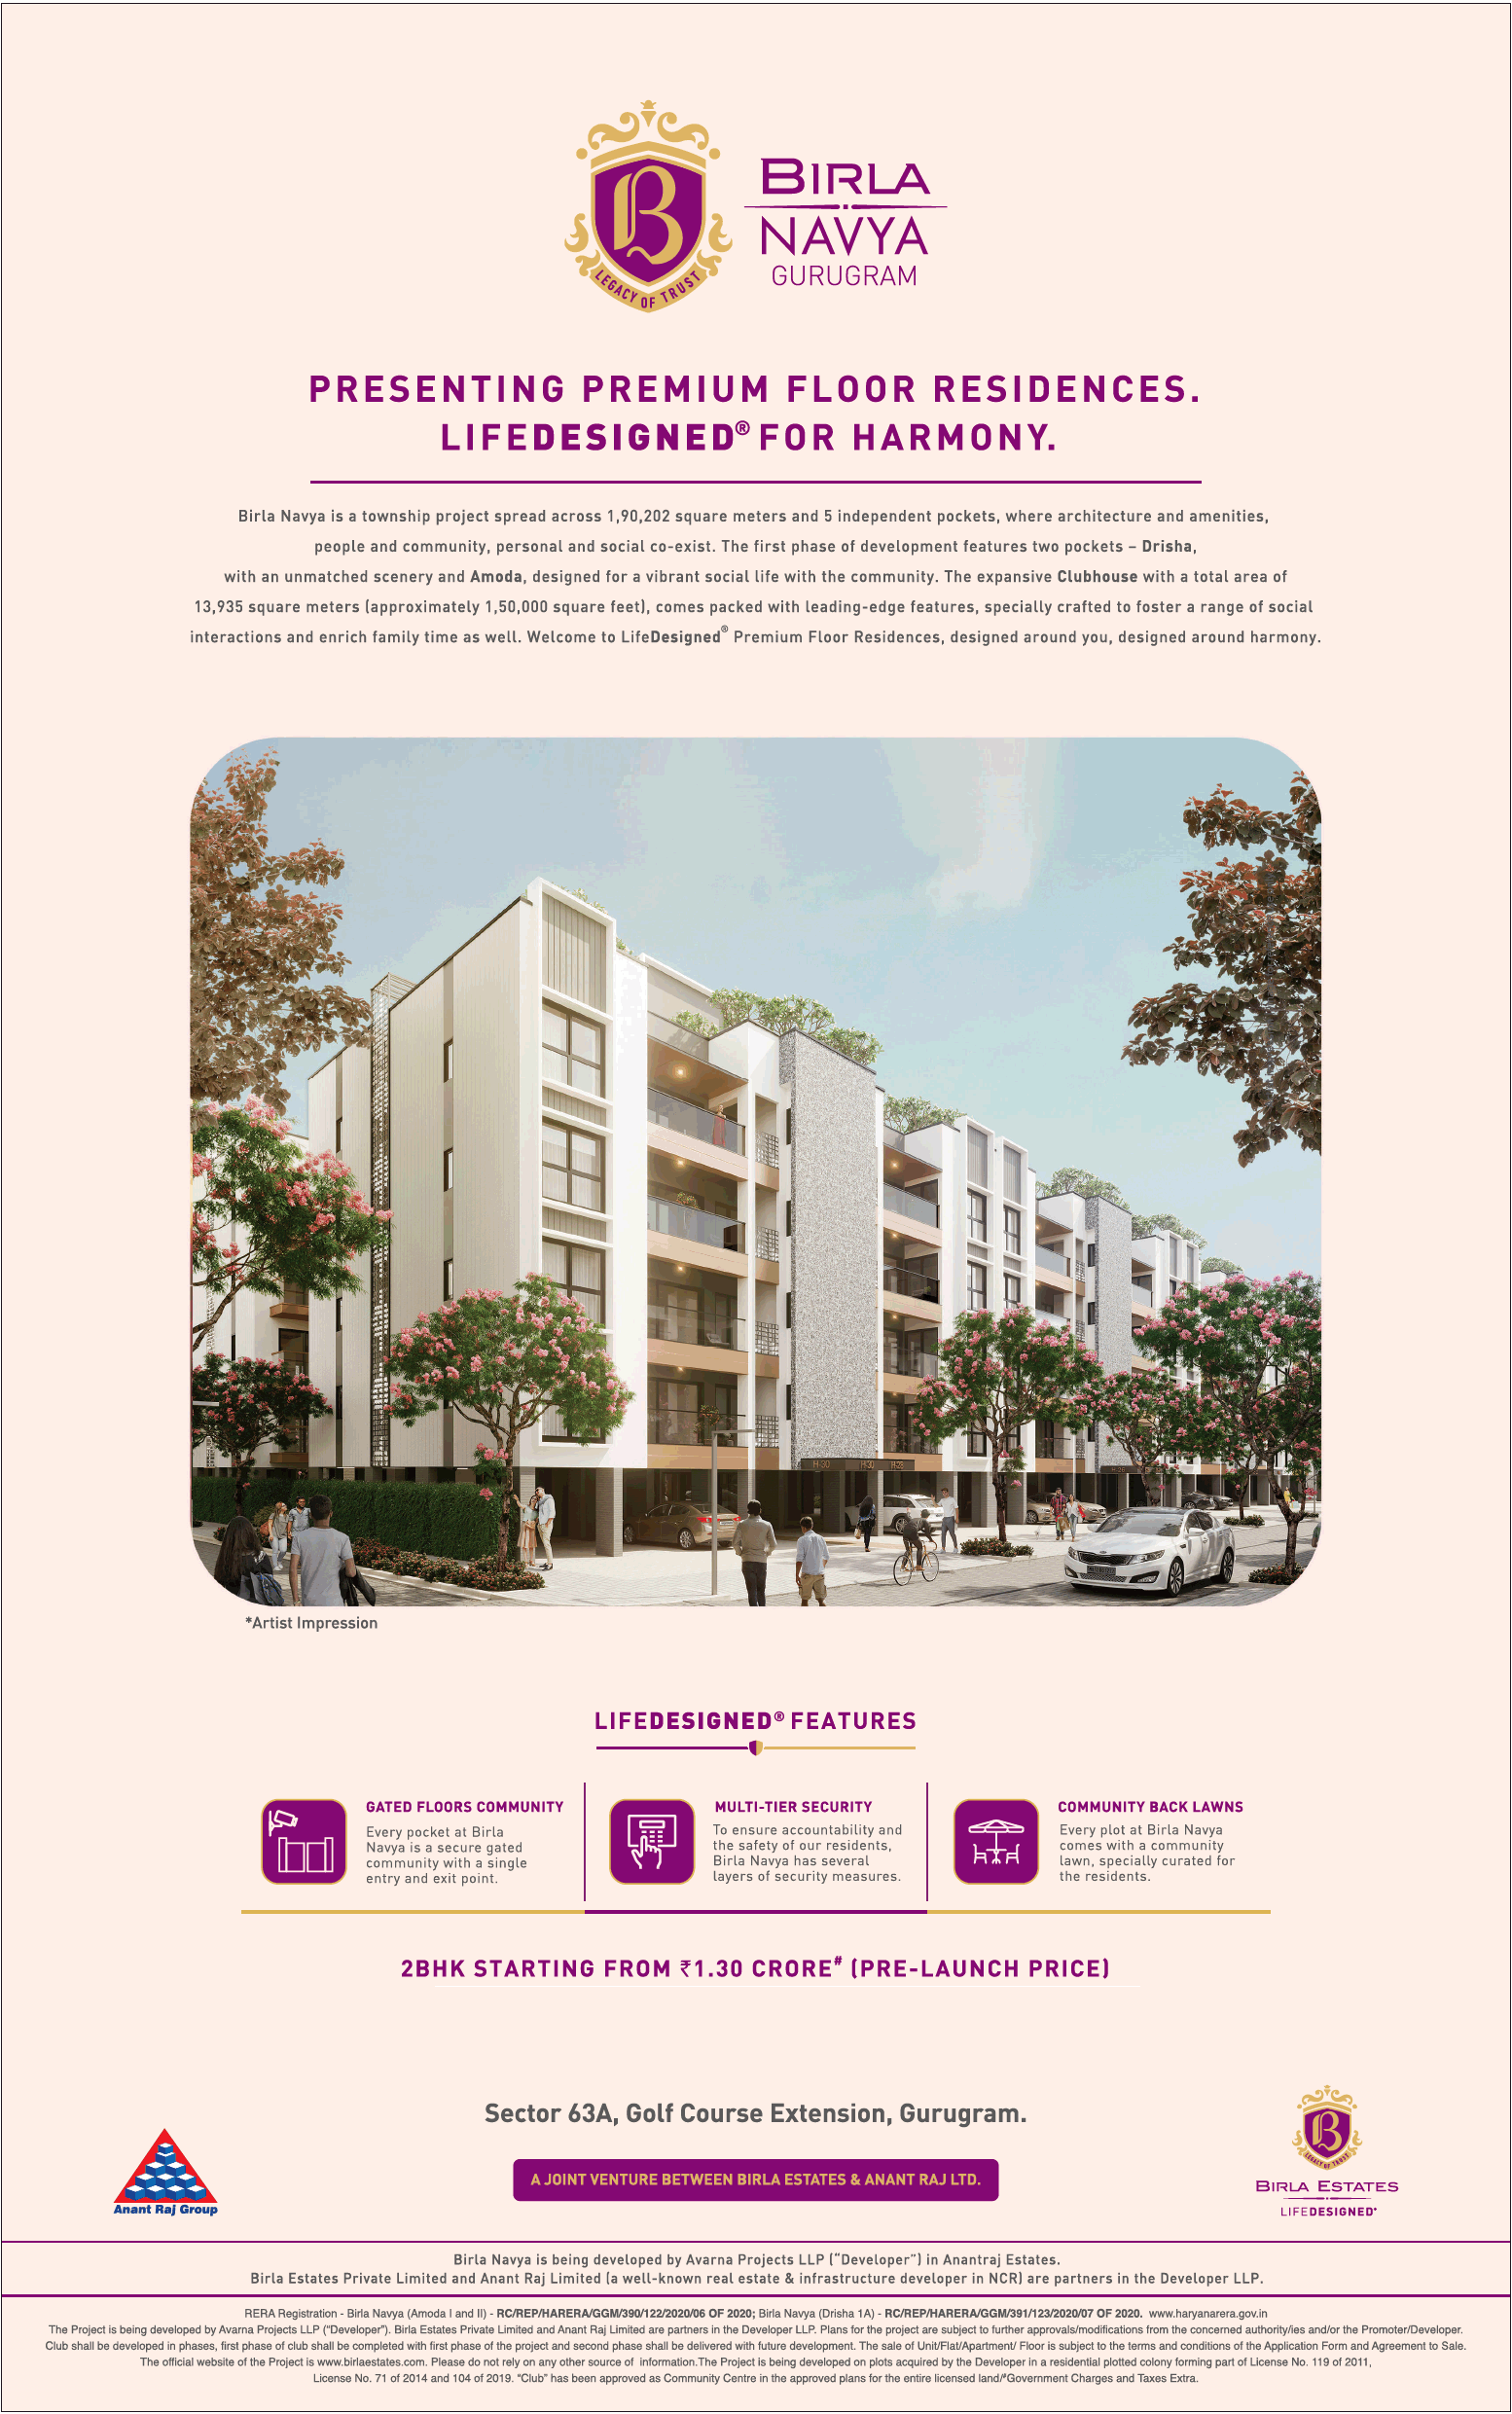 2 BHK apartment starting from Rs 1.30 Cr at Birla Navya in Gurgaon Update